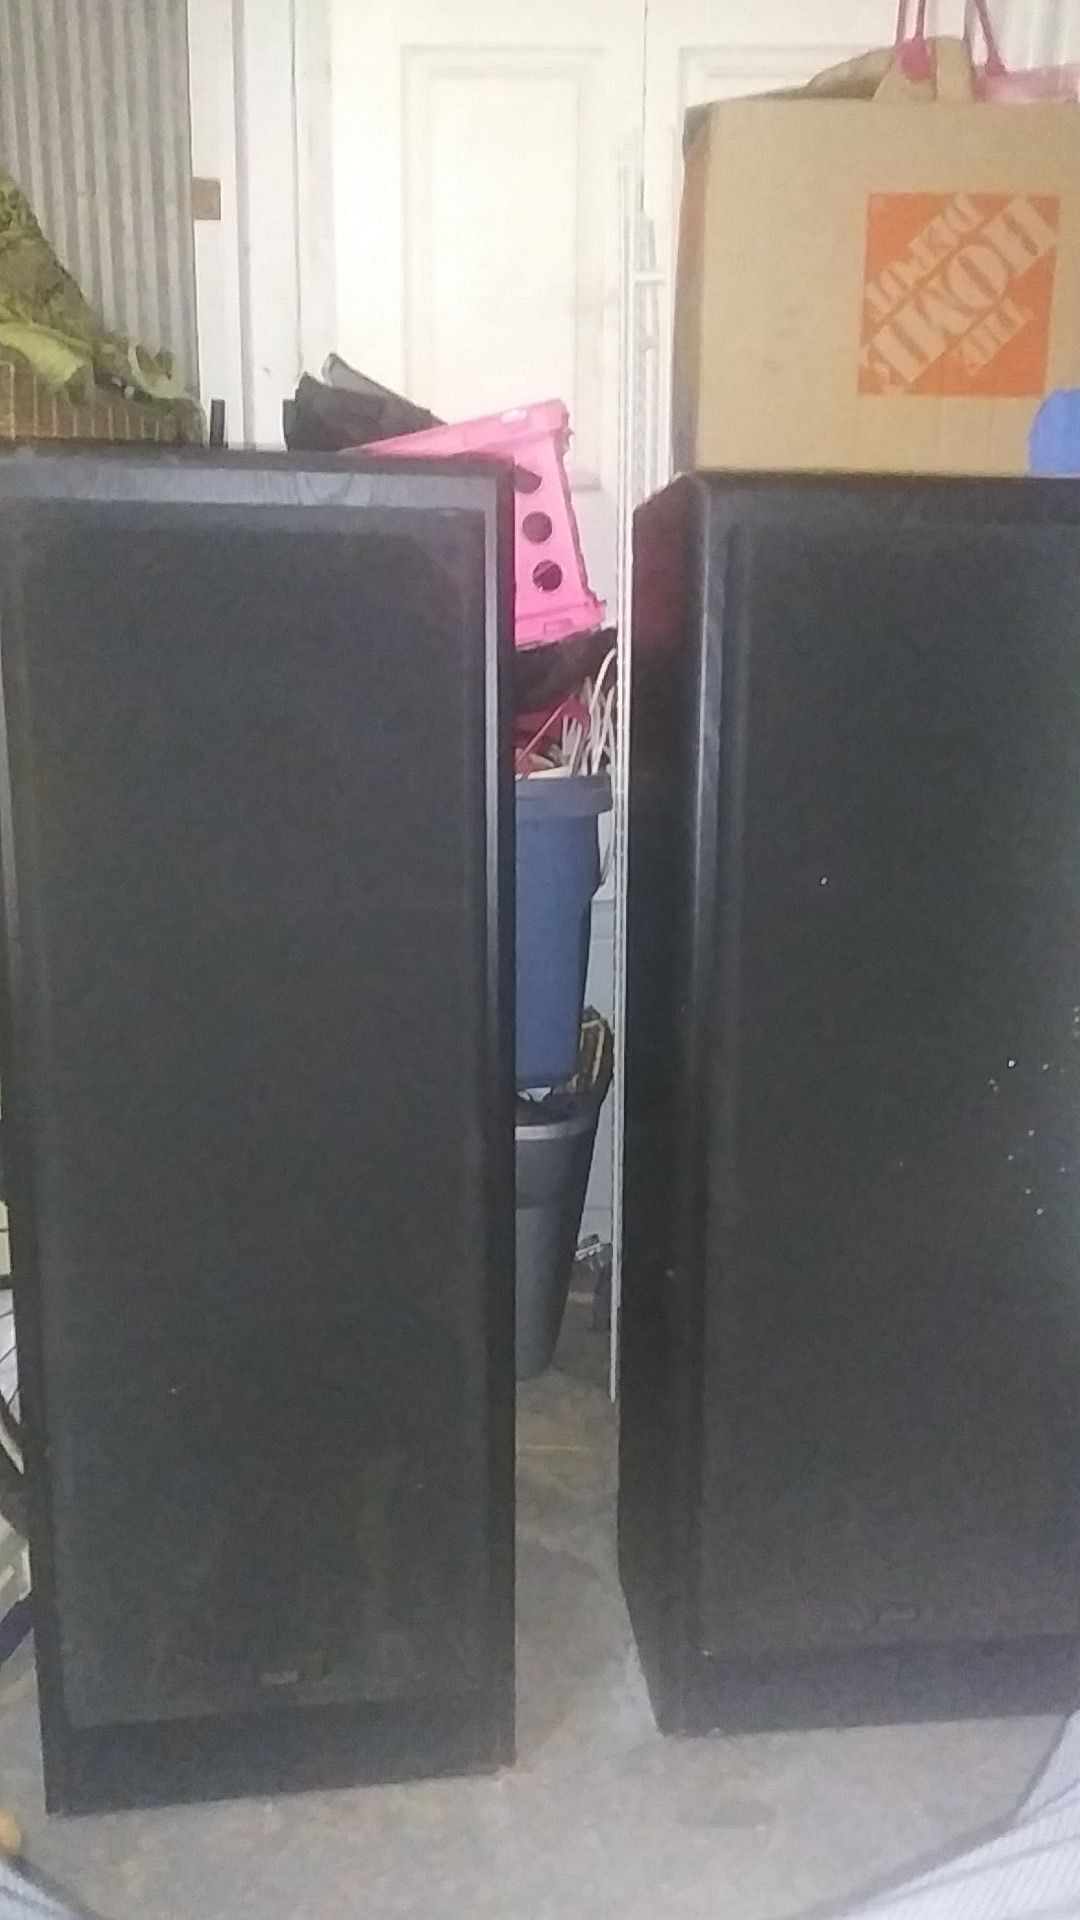 used speakers They Work 60. OBO